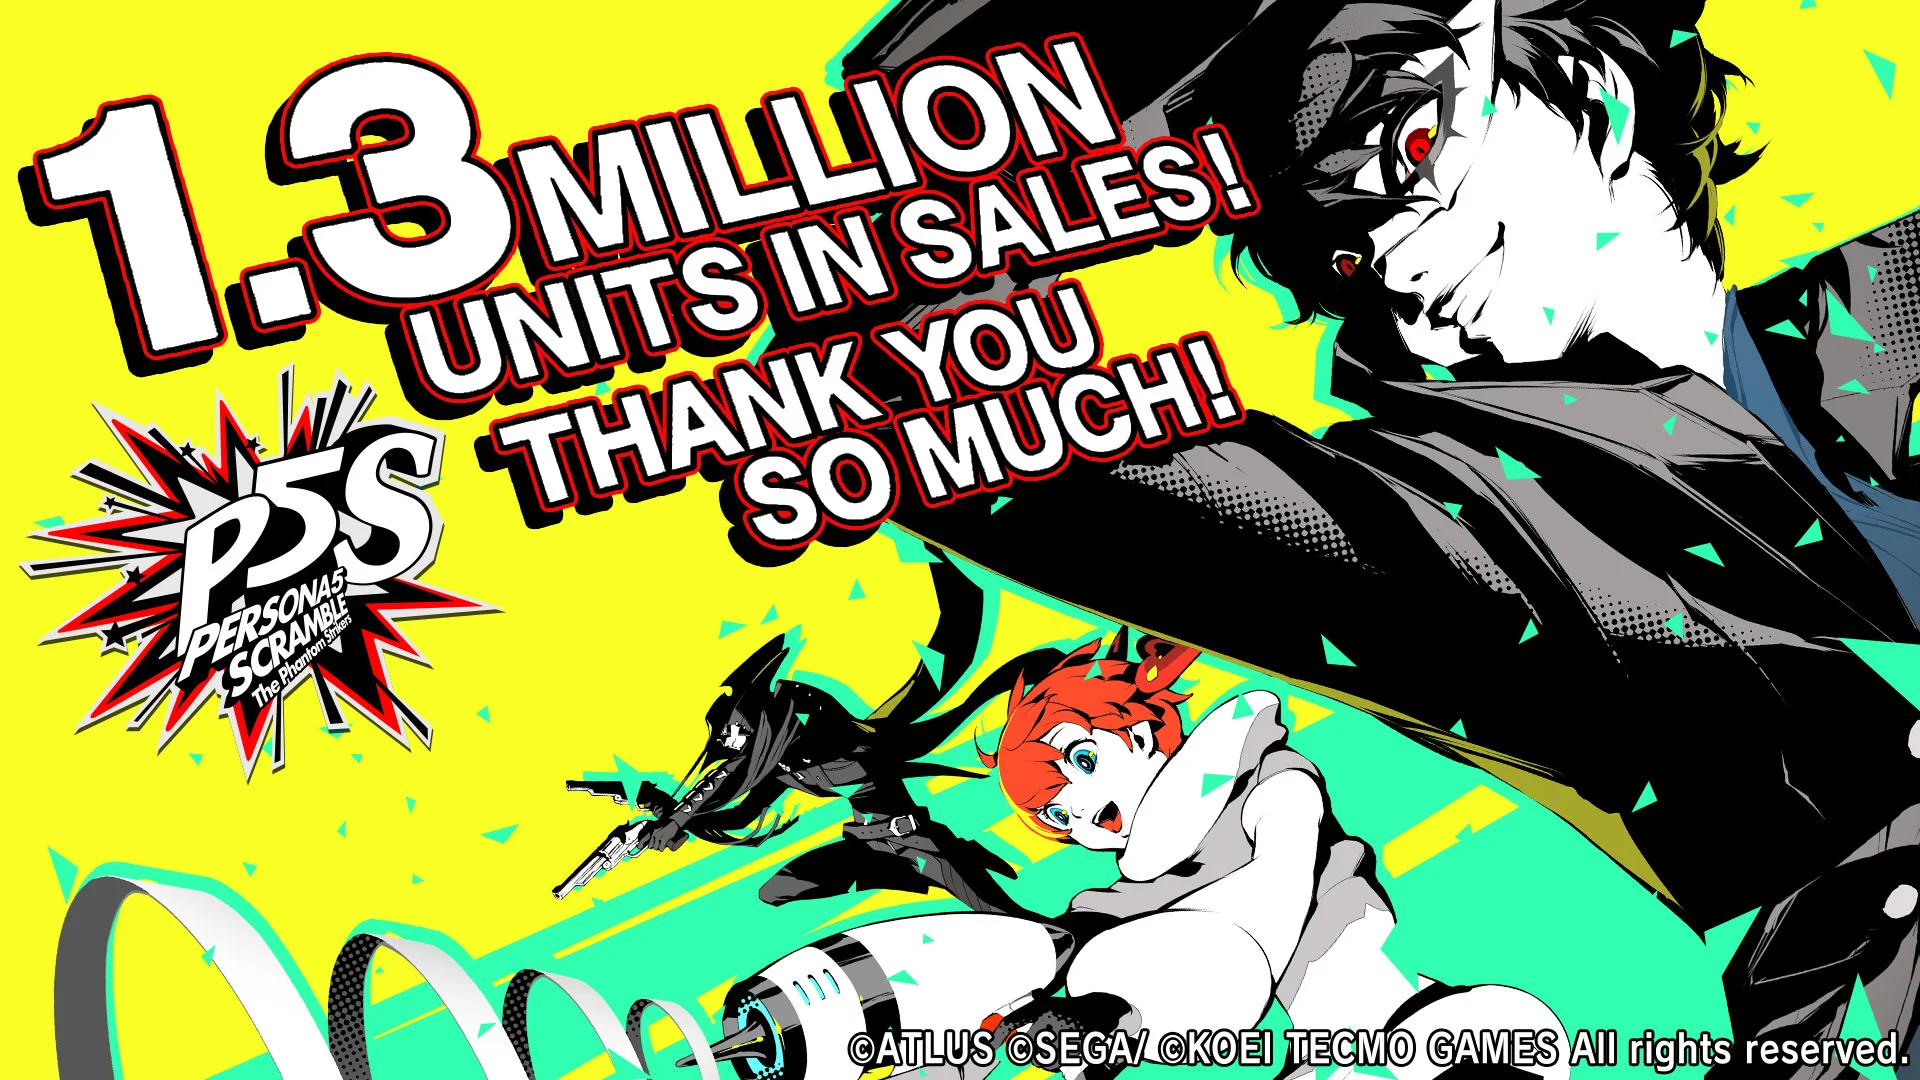 Persona 5 Strikers разошлась тиражом в 1,3 млн копий - фото 1